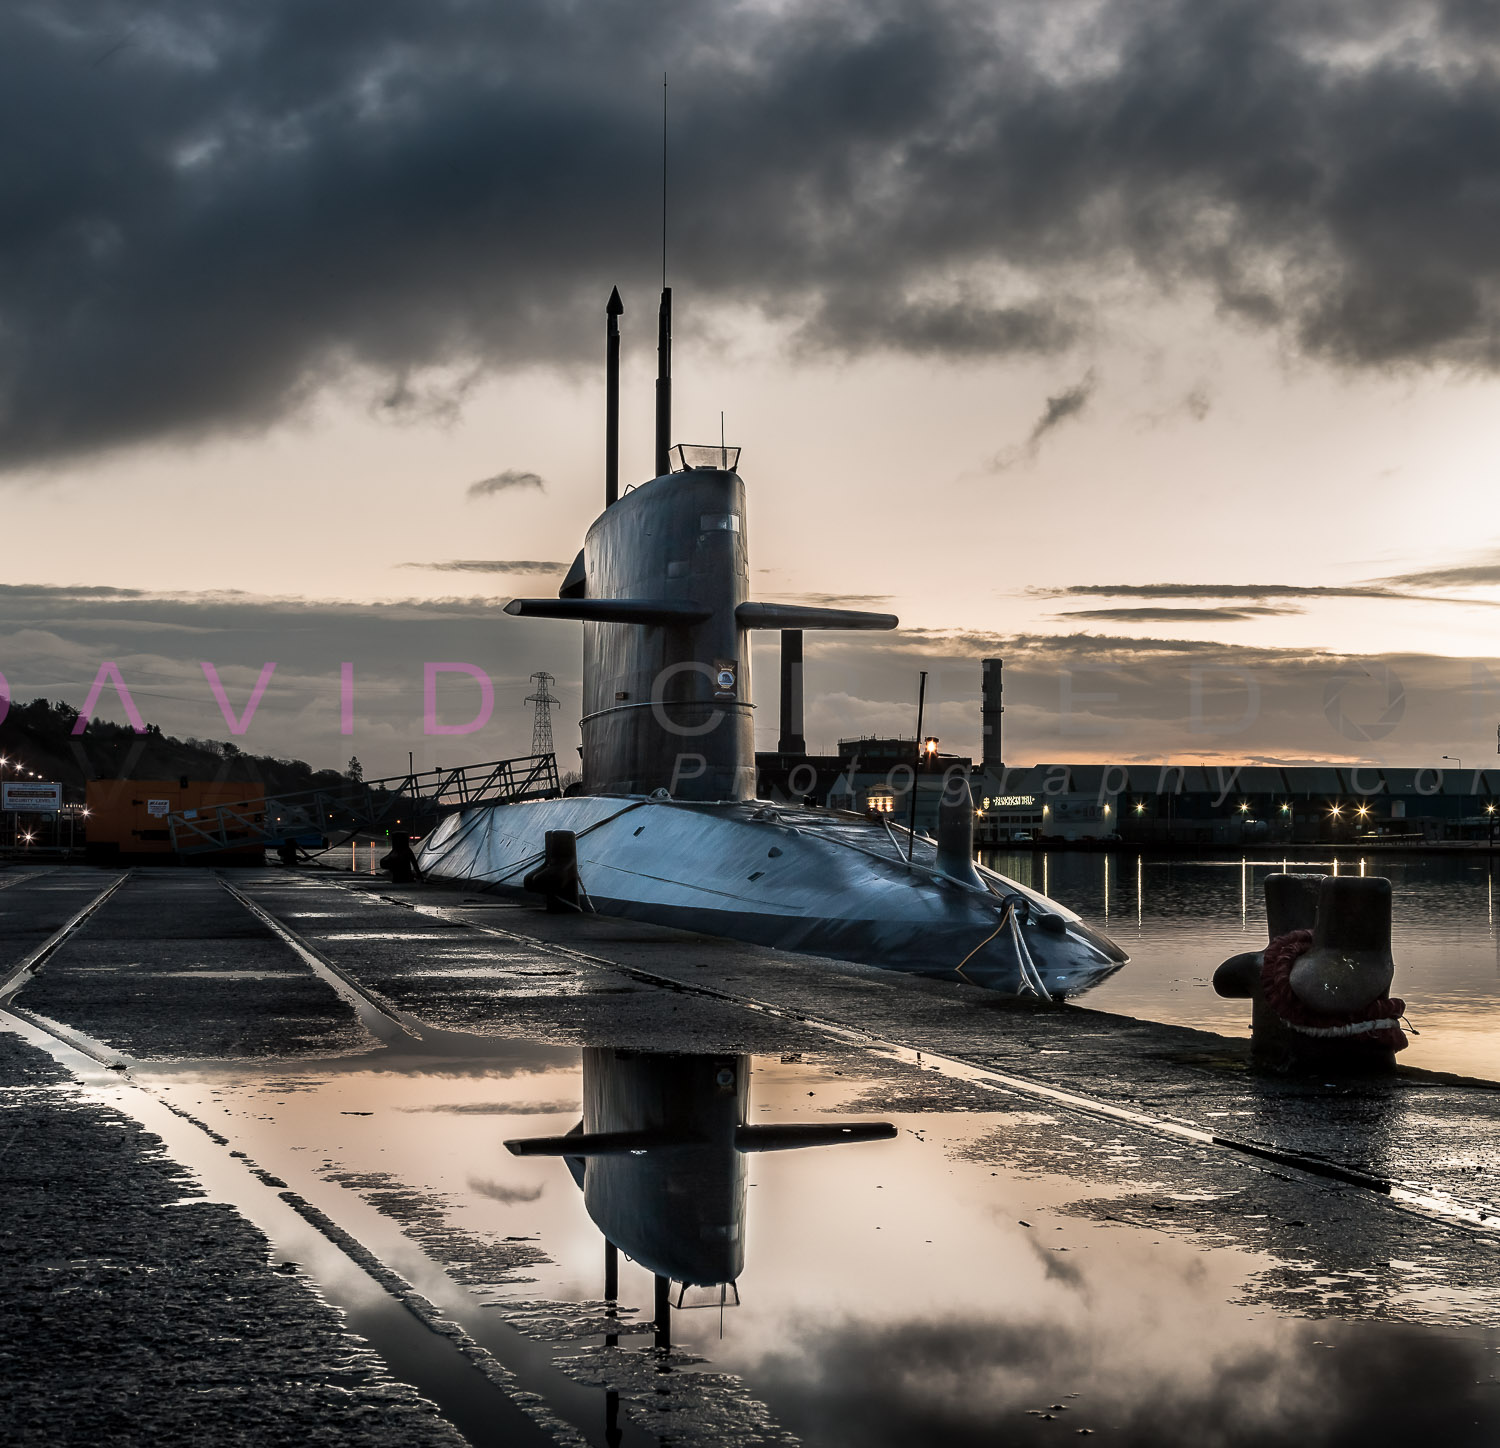 SubmarineHNLMS Walrus at Horgan's Wharf Cork